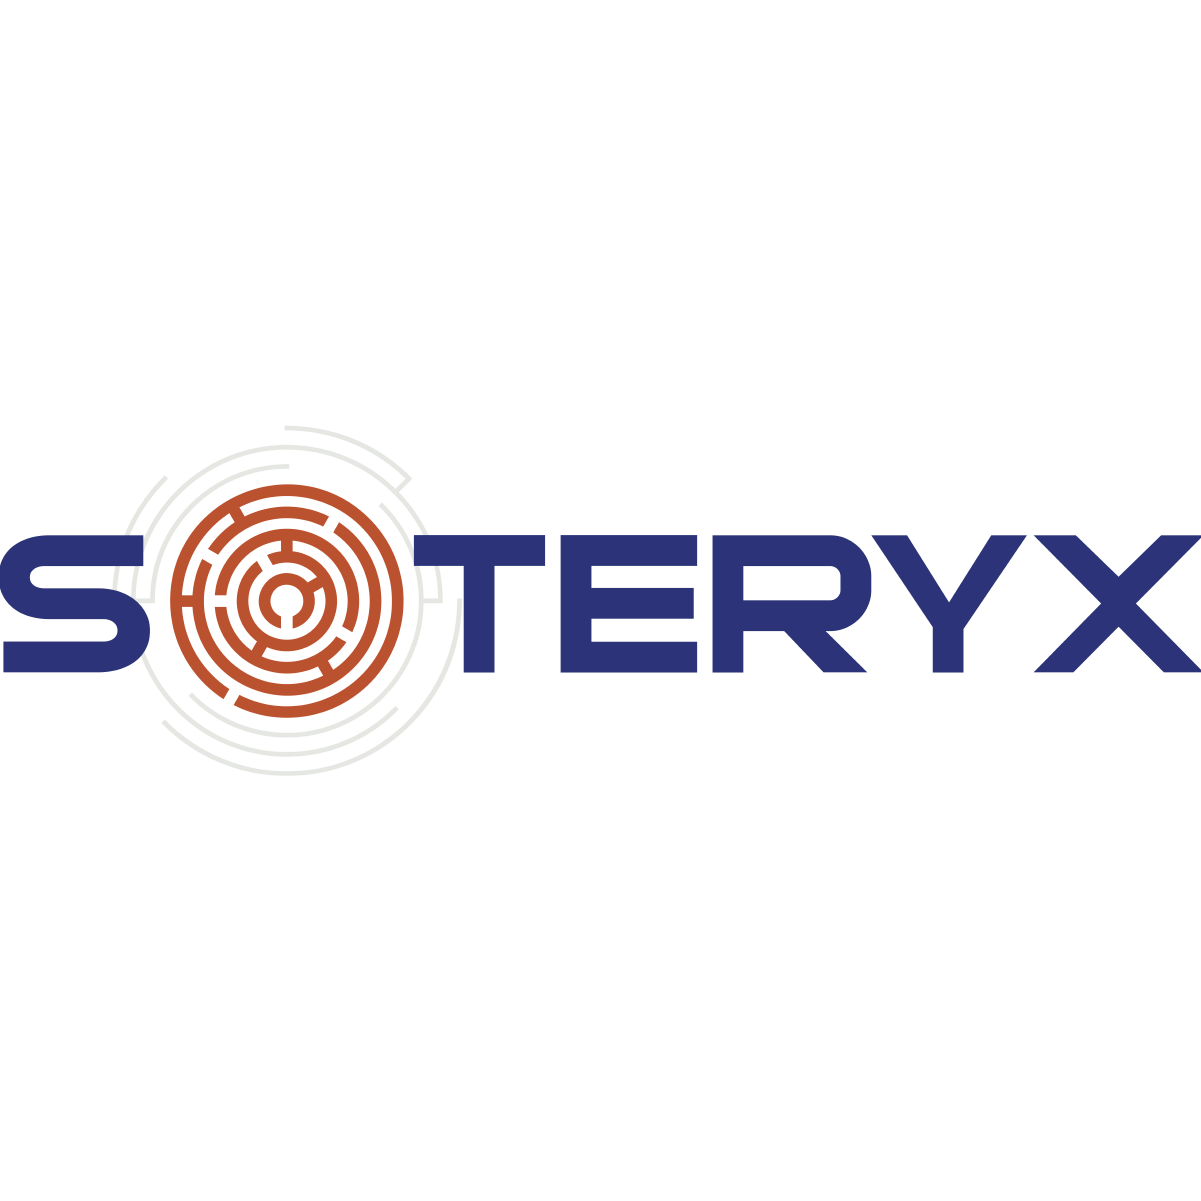 Soteryx logo